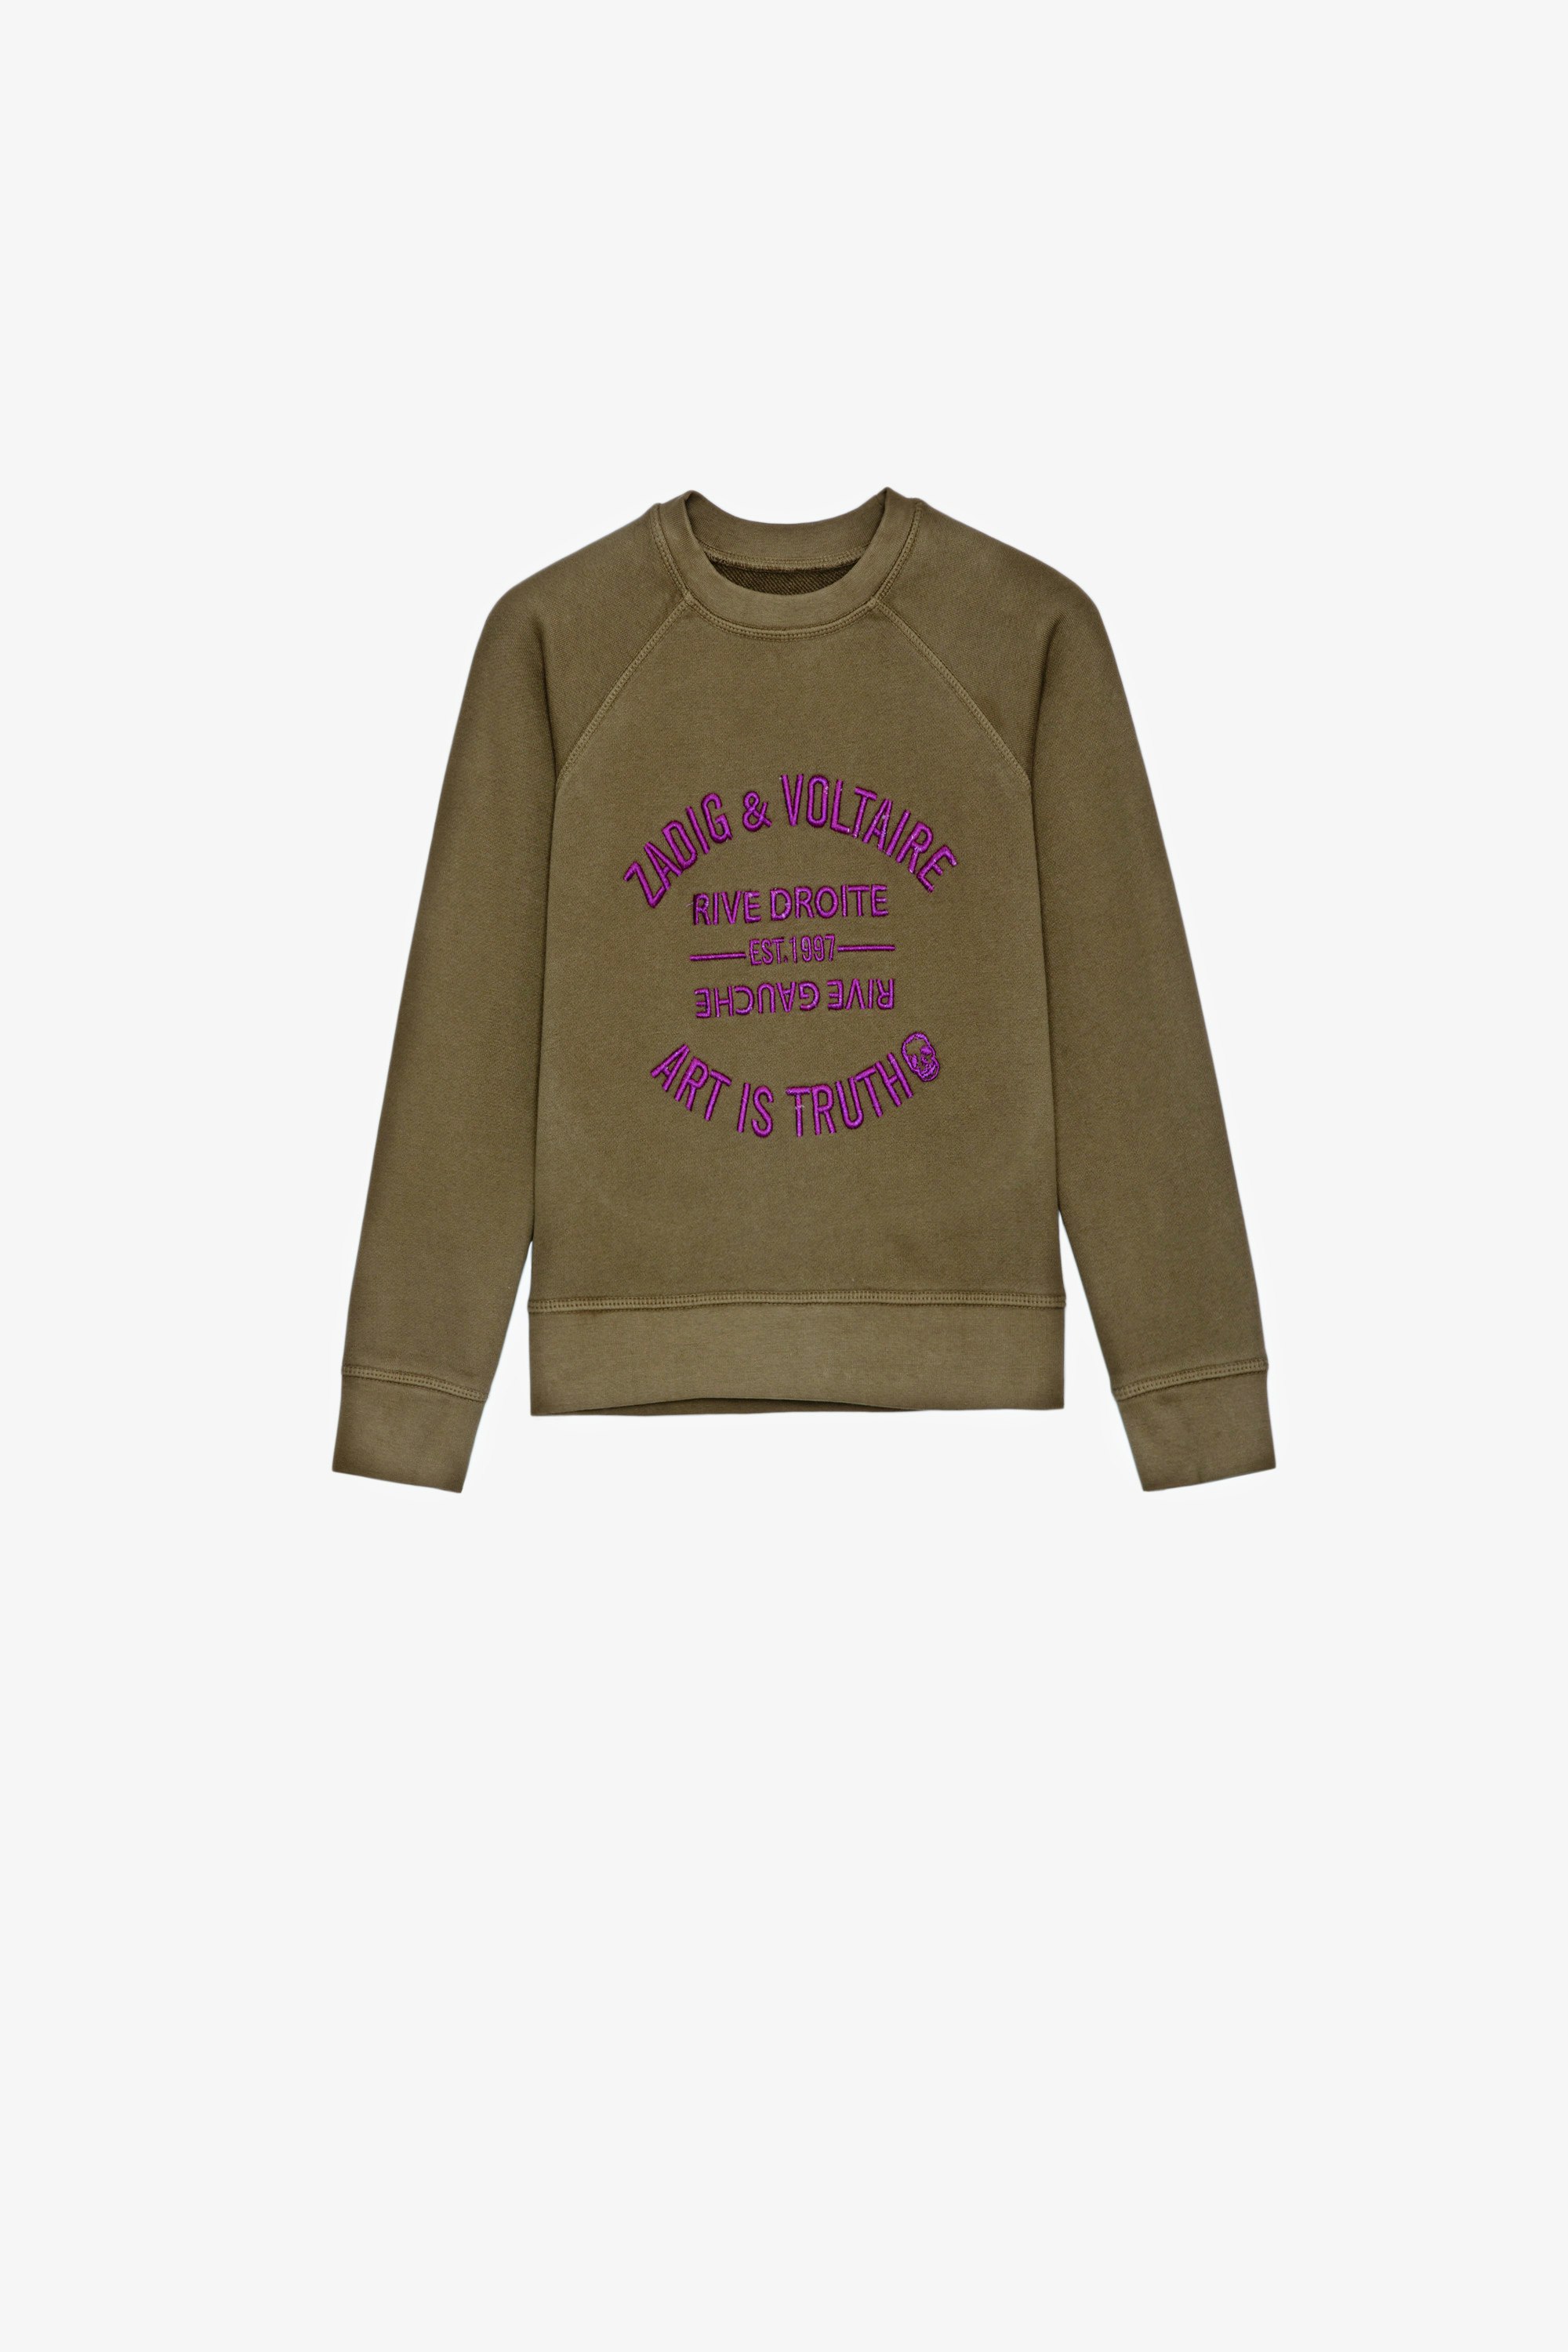 Upper Children’s スウェット Children’s khaki sweatshirt with insignia 